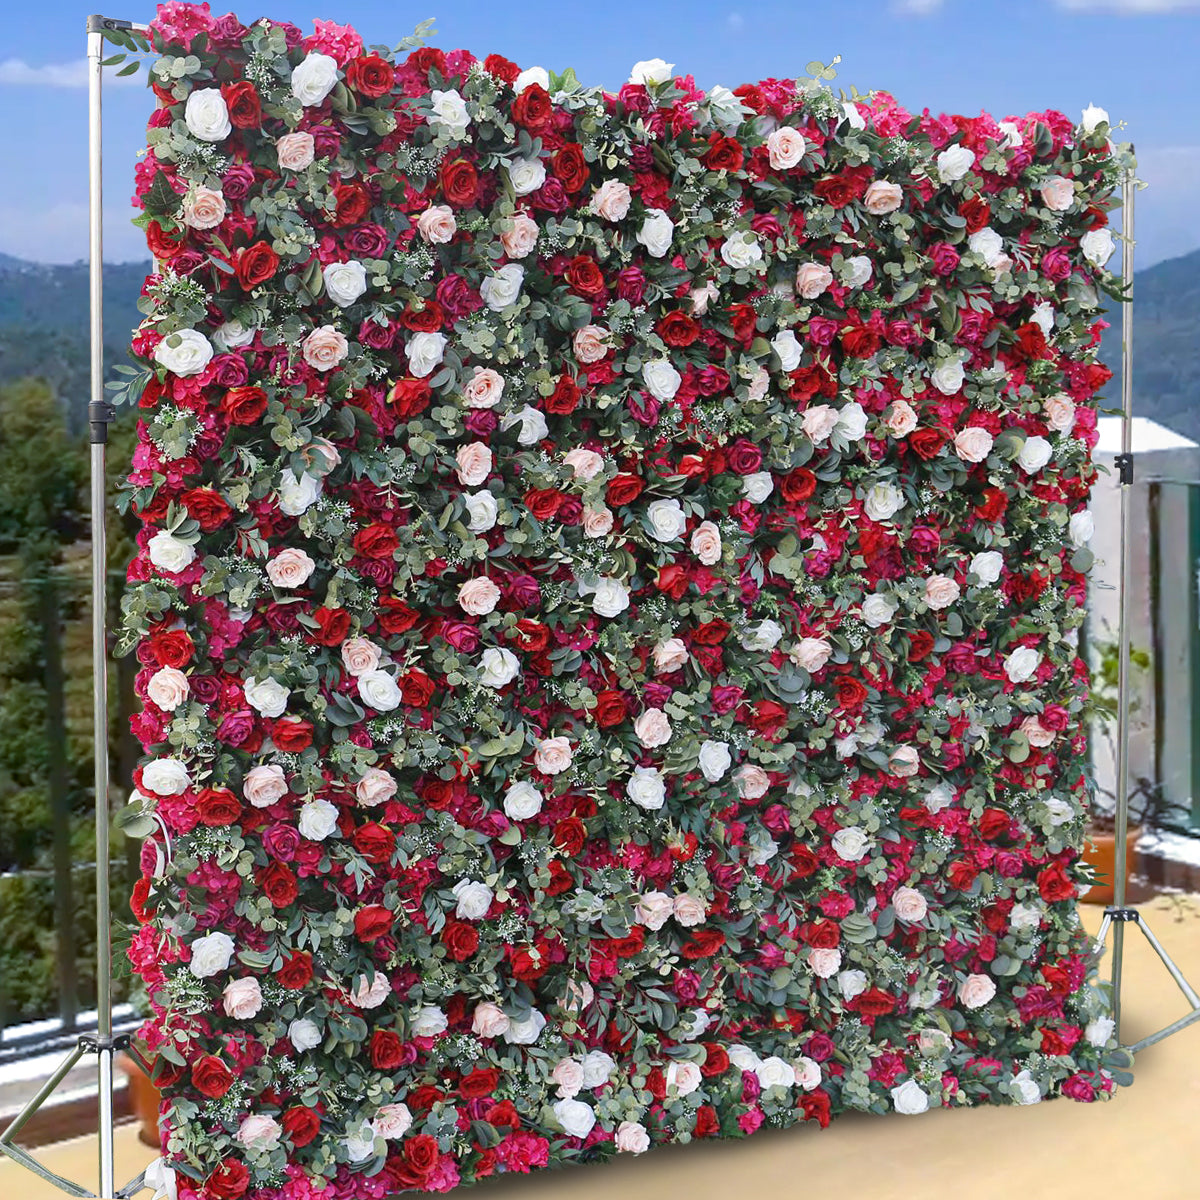 3D Artificial Flower Wall Arrangement Wedding Party Birthday Backdrop Decor HQ9030